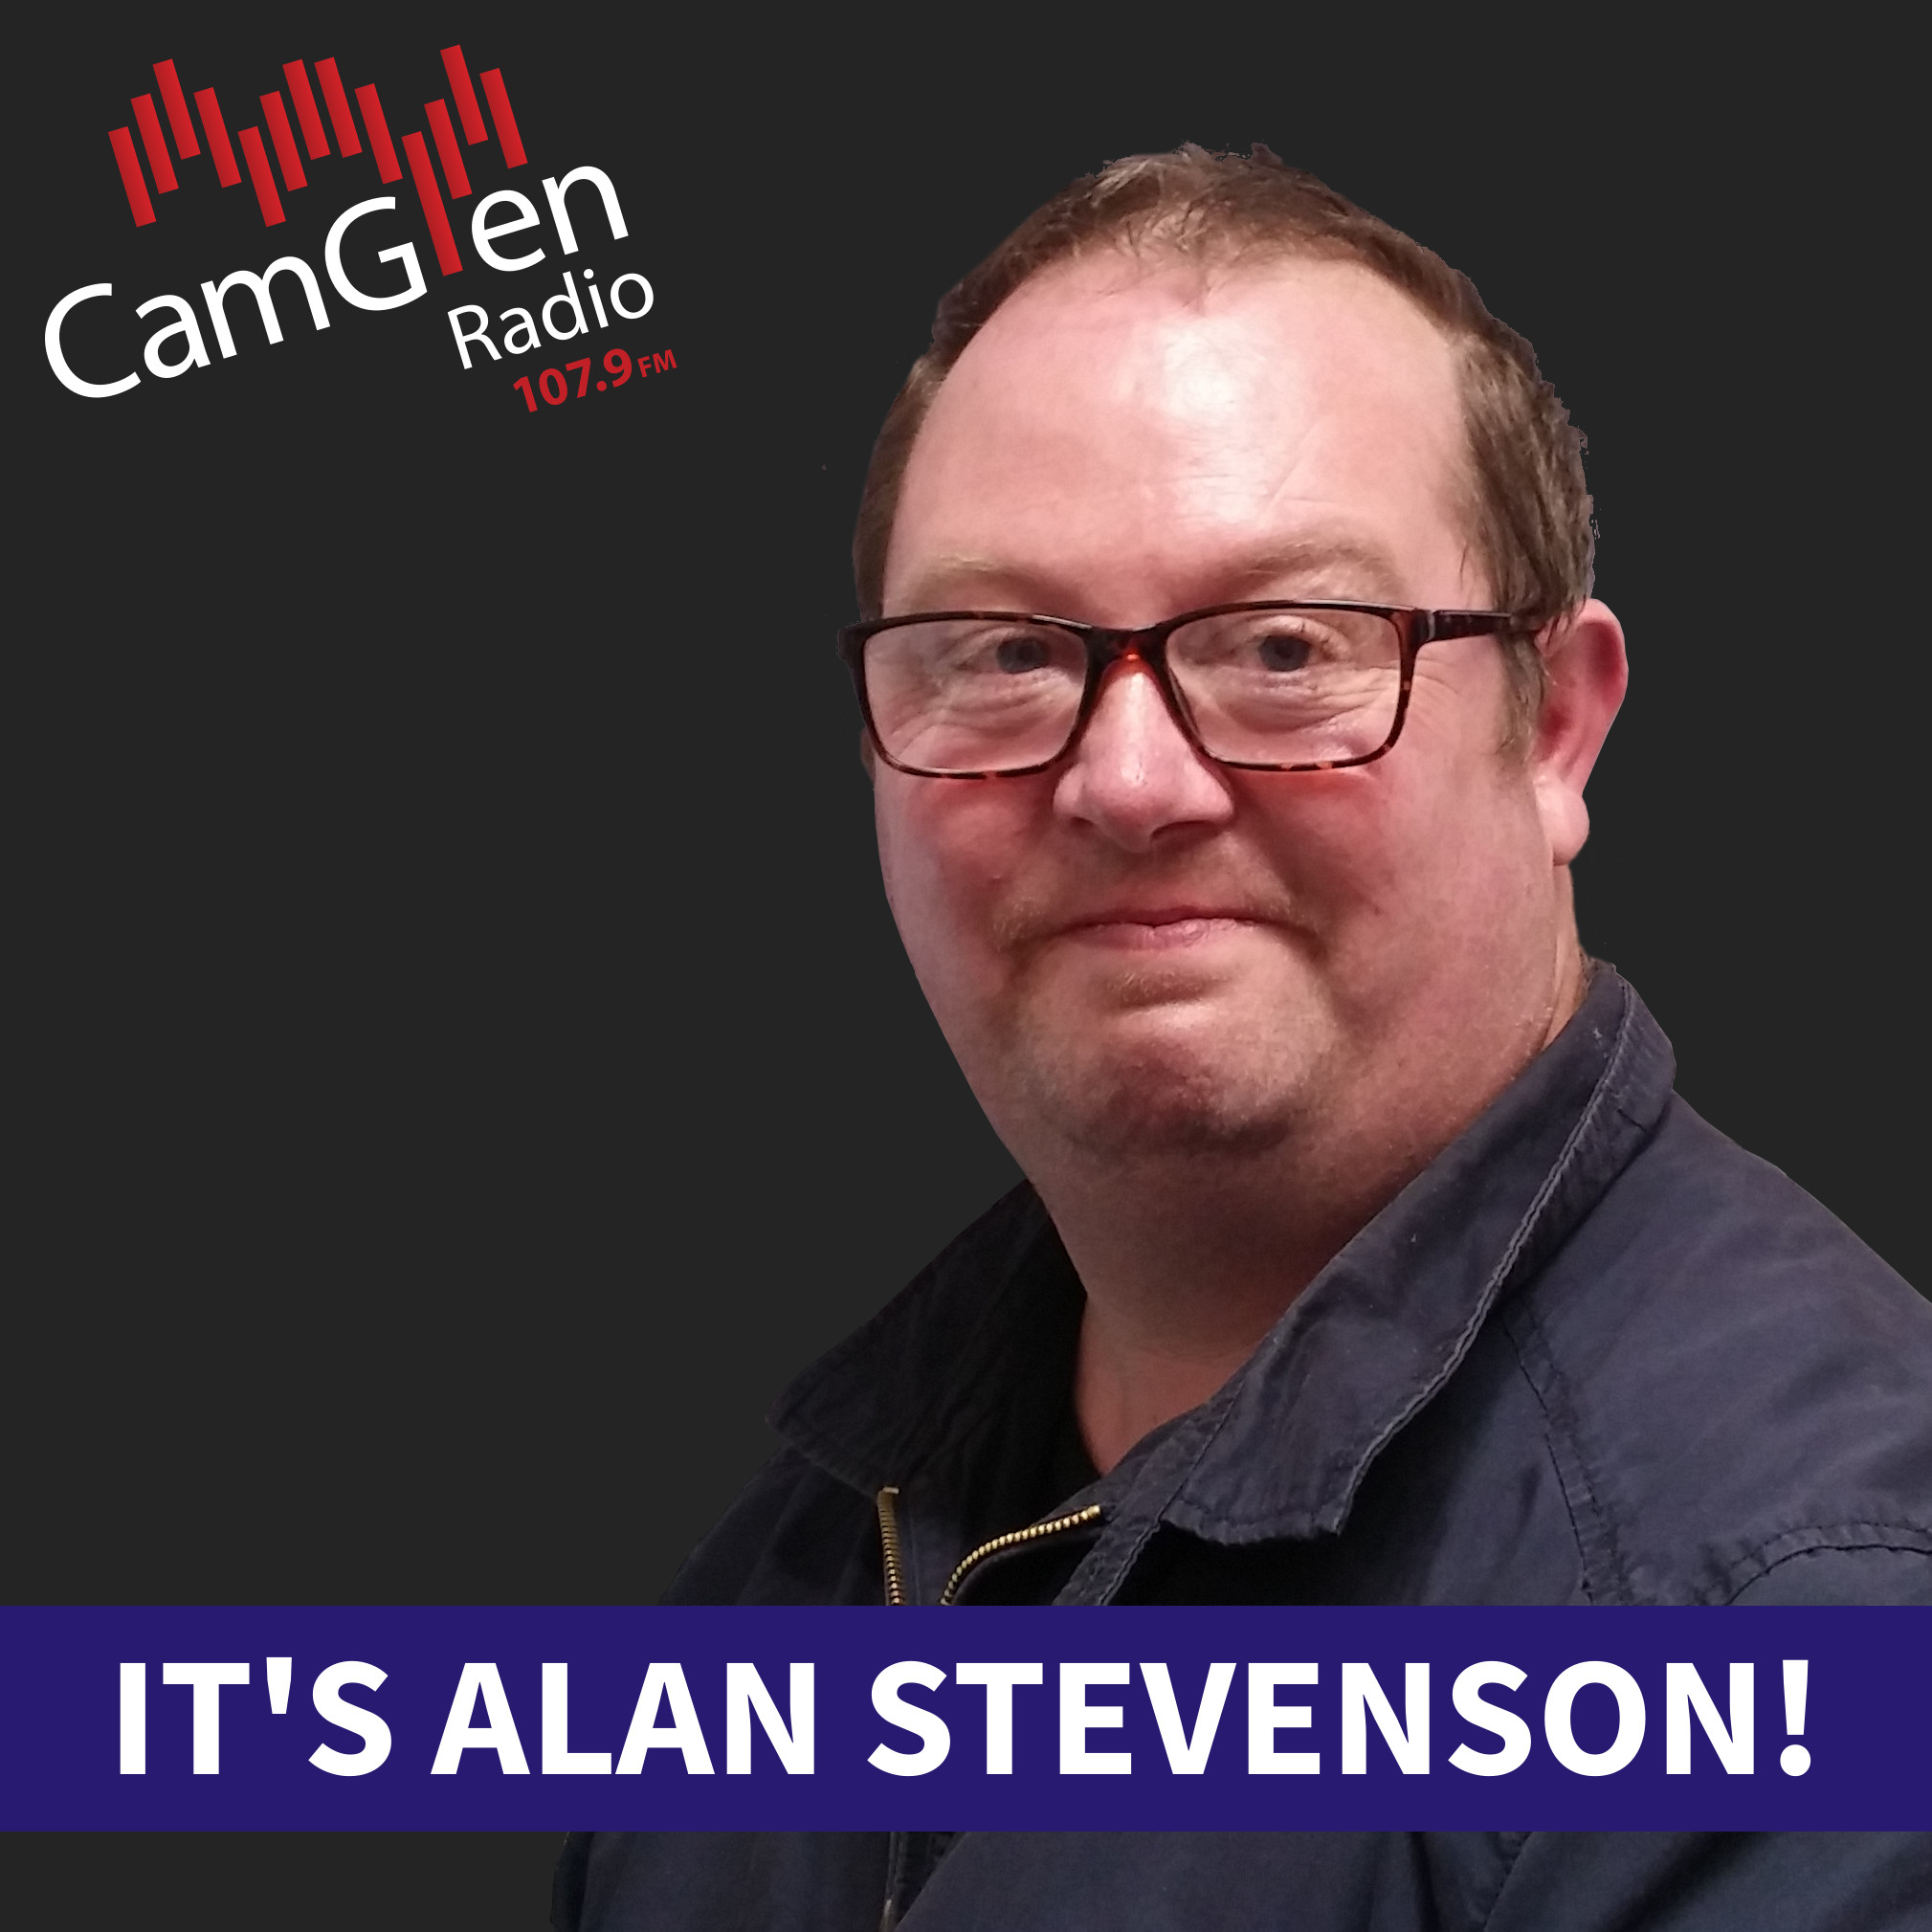 It's Alan Stevenson!